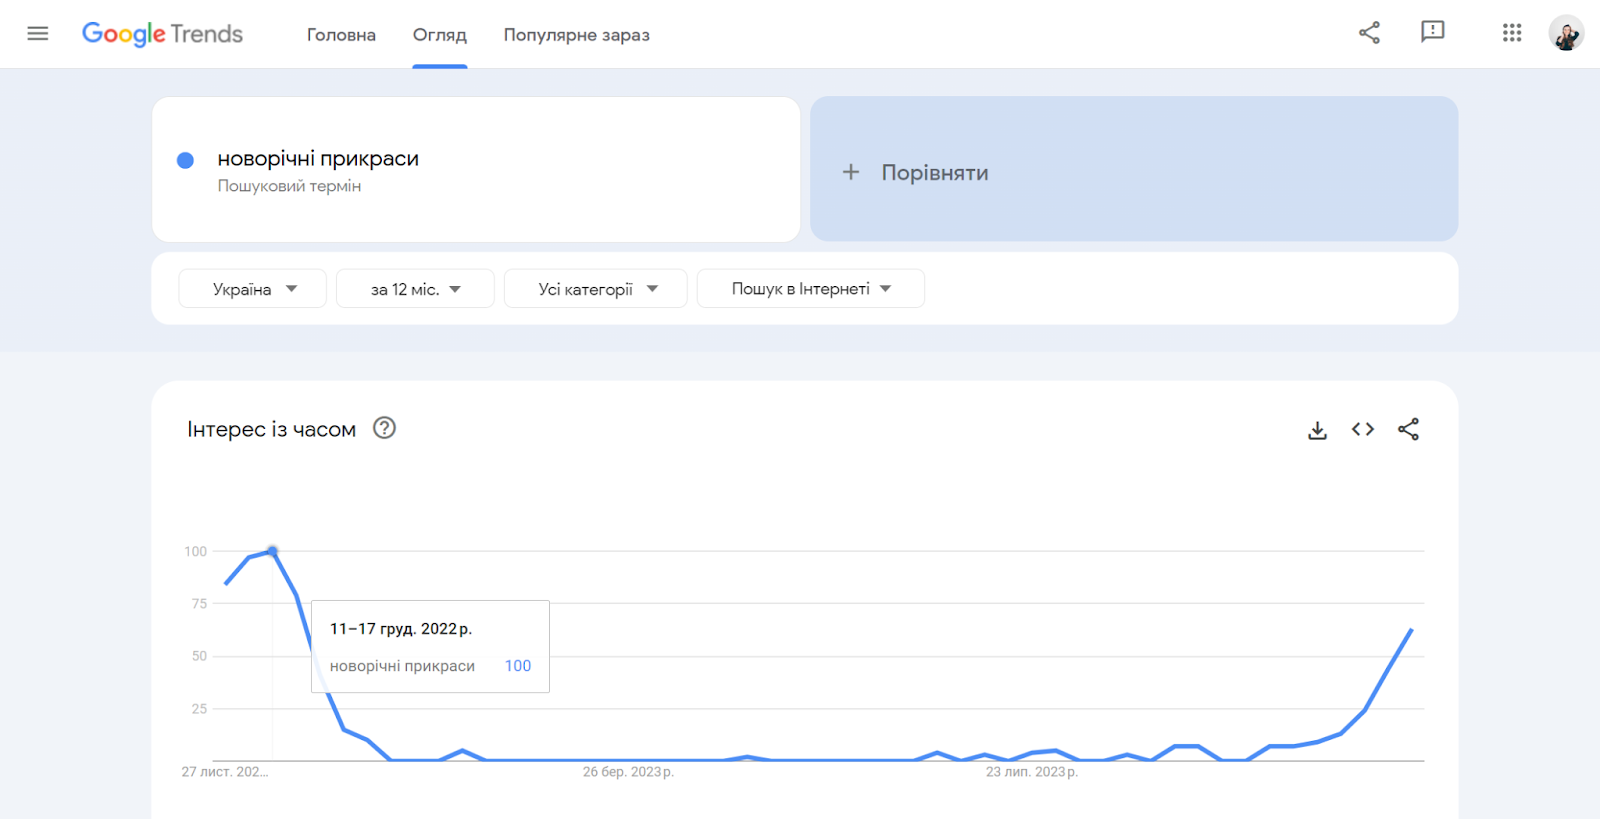 бюджет на контекстну рекламу у святковий період, Google Trends